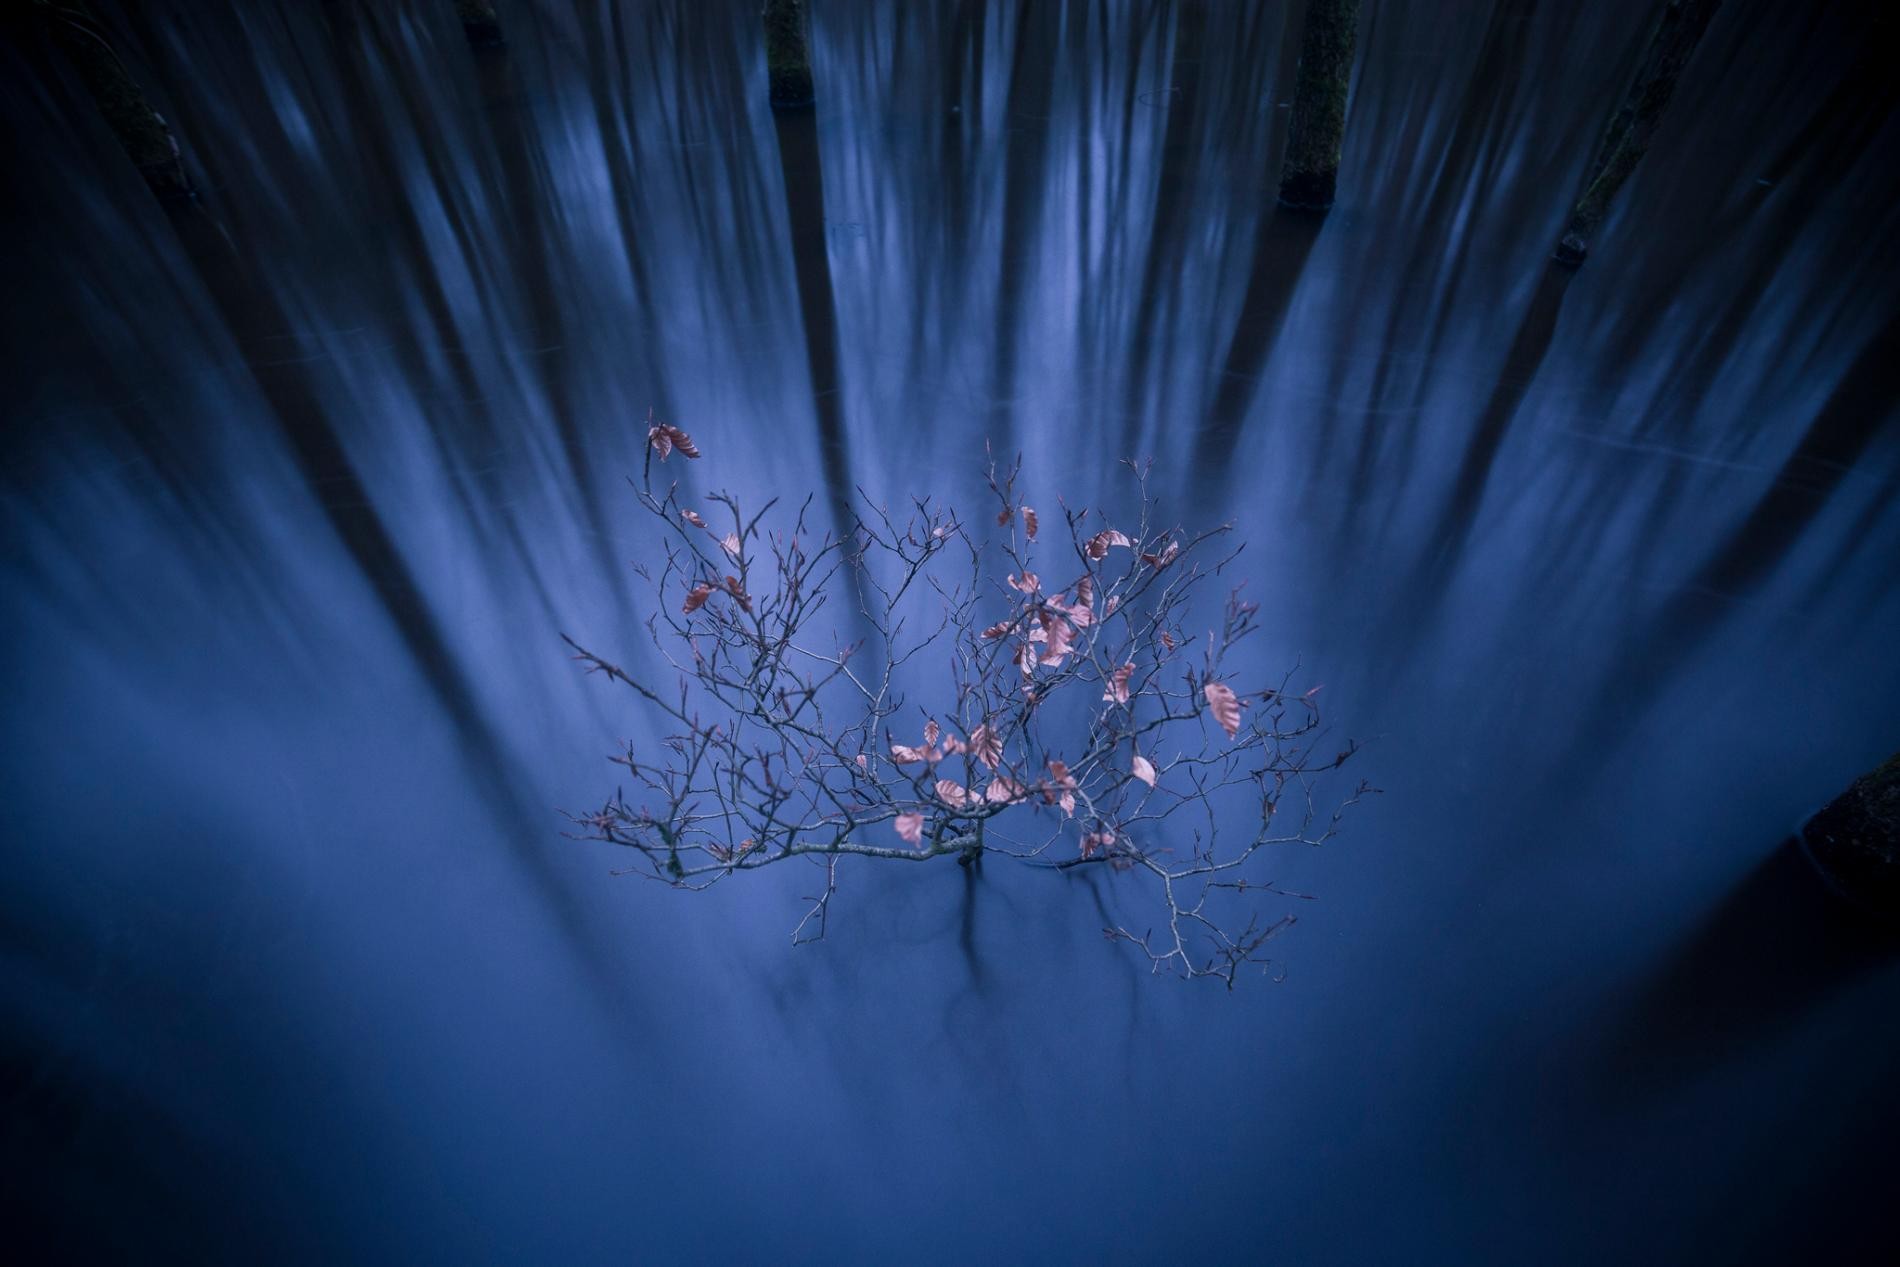 Борьба за жизнь. Деревце в воде, Нидерланды. Автор Джейкоб Каптейн